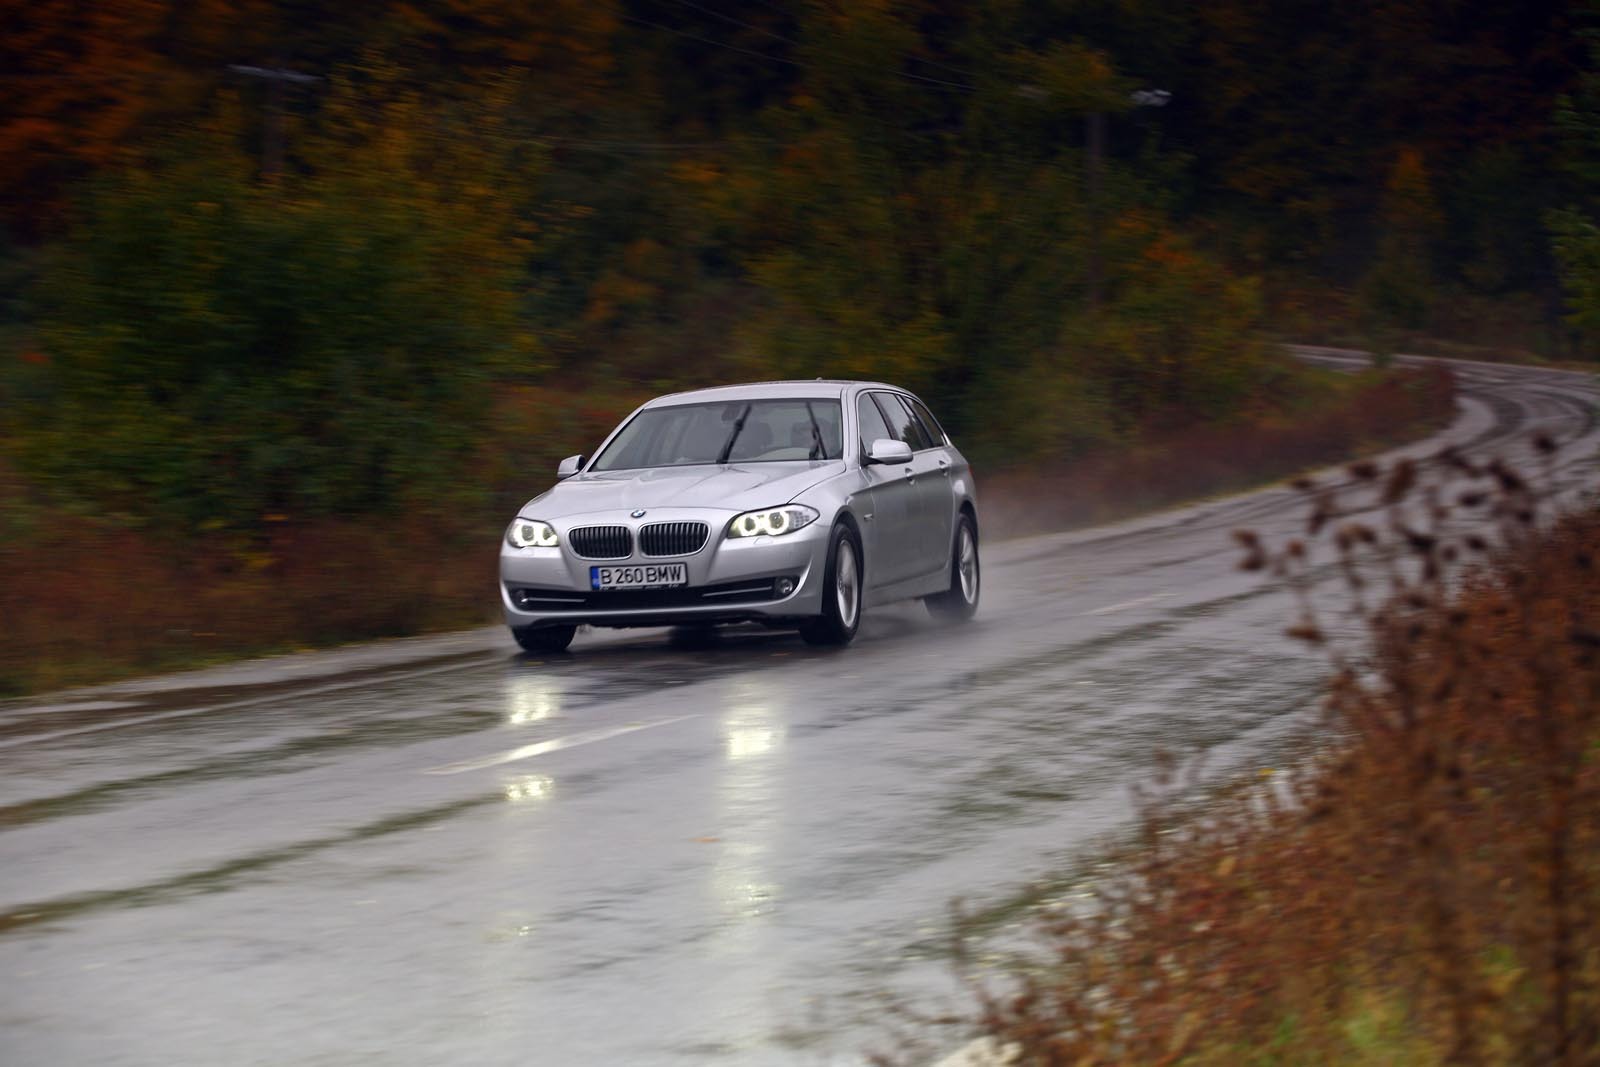 BMW 530d Touring, dotat cu Integral Active Steering, este un devorator de viraje